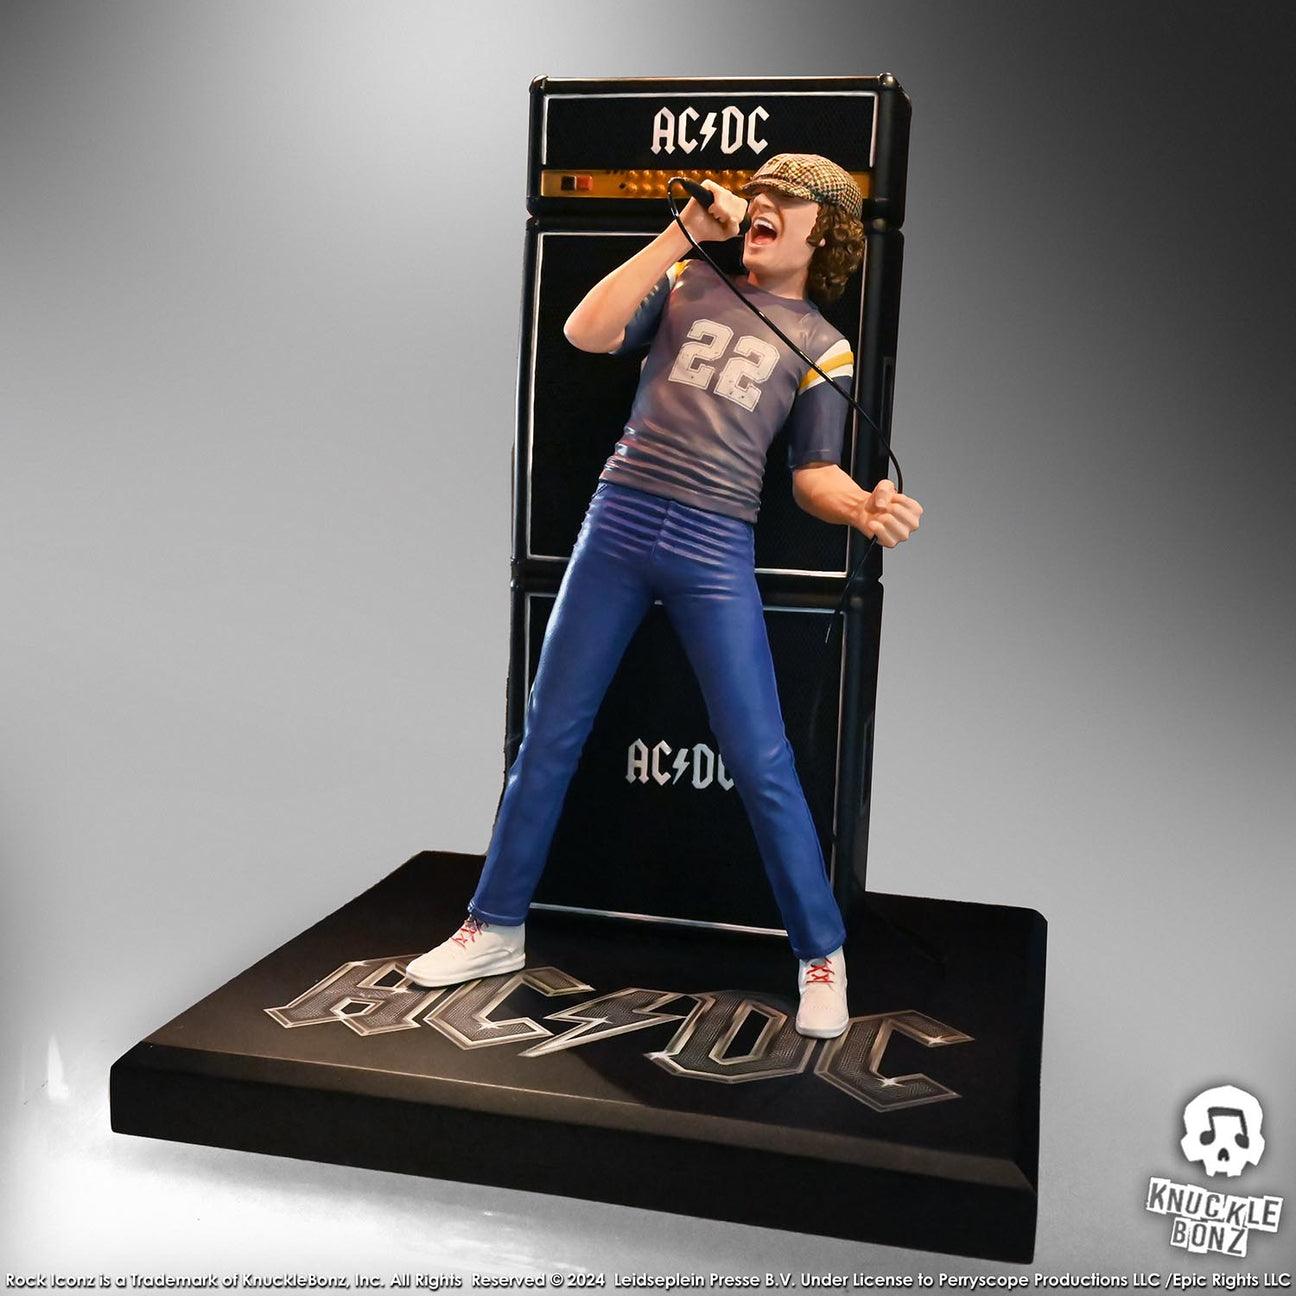 KNUACDCBRIAN100 AC/DC - Brian Johnson "Limited Edition" Rock Iconz Statue - KnuckleBonz - Titan Pop Culture